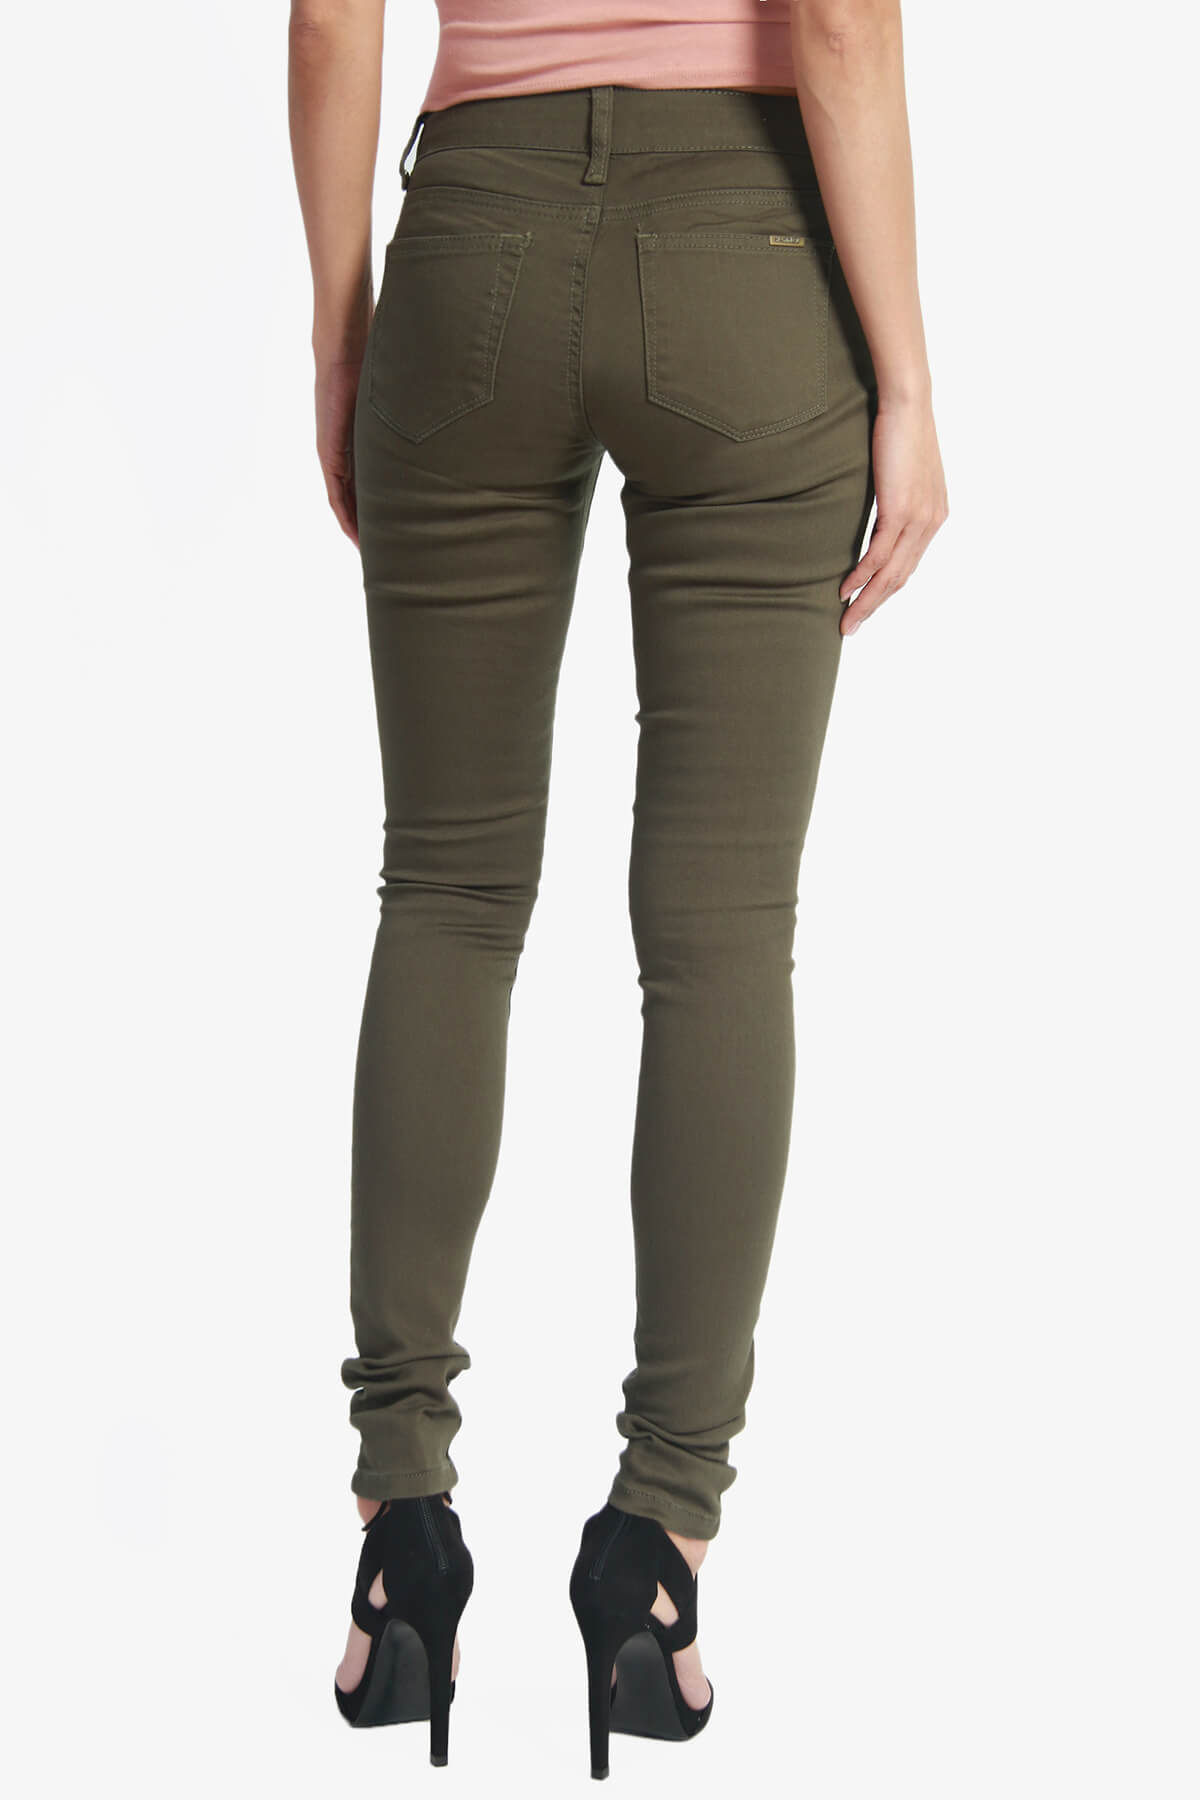 TheMogan Women's Army Olive Green 5 Pocket Stretch Denim Low Rise Skinny Jeans - image 2 of 7